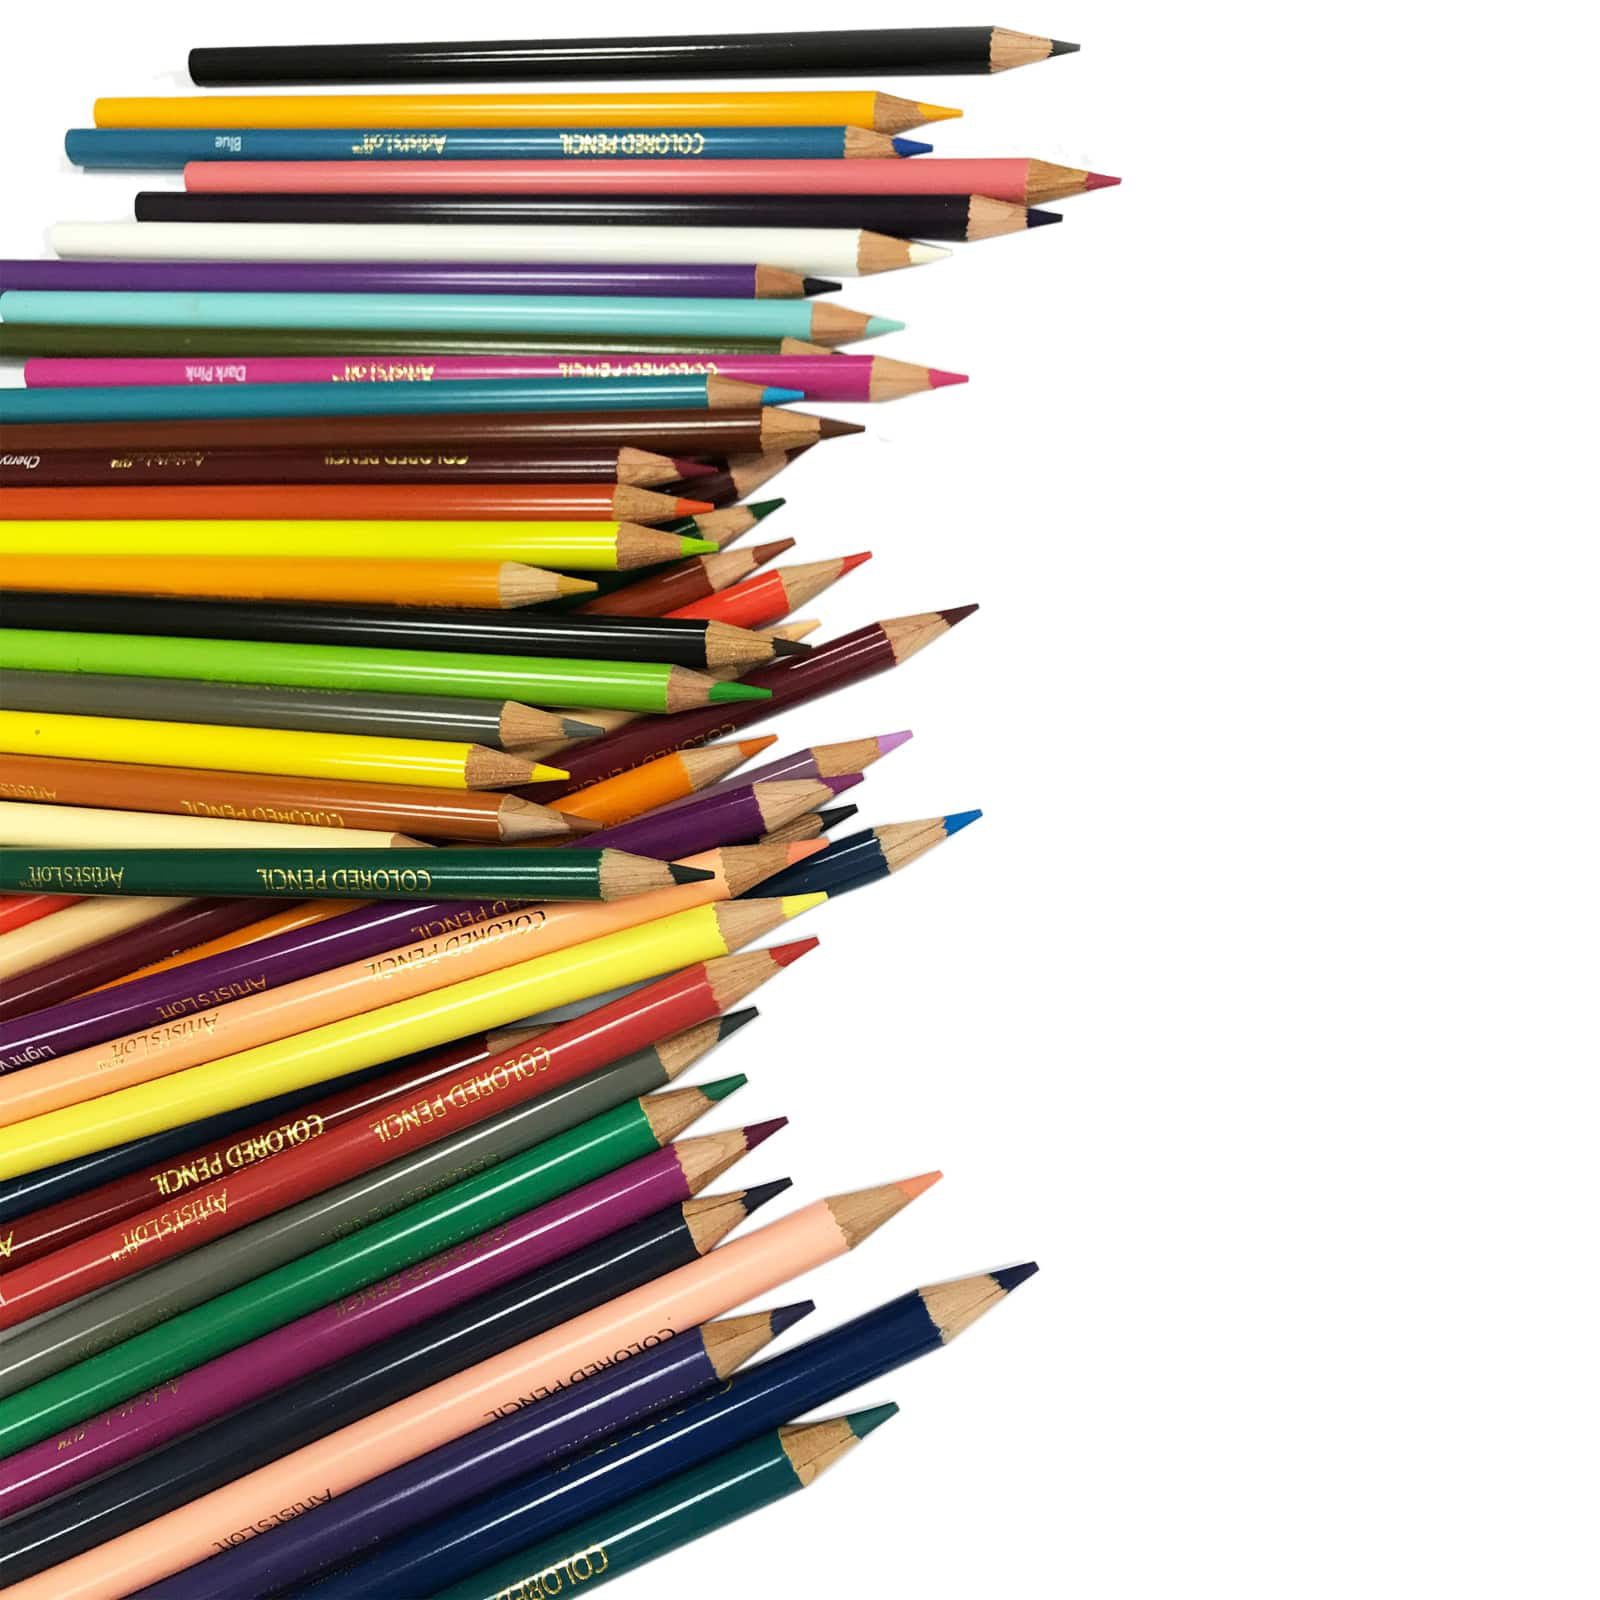 12 Packs: 6 ct. (72 total) Sketching Pencils by Artist's Loft™